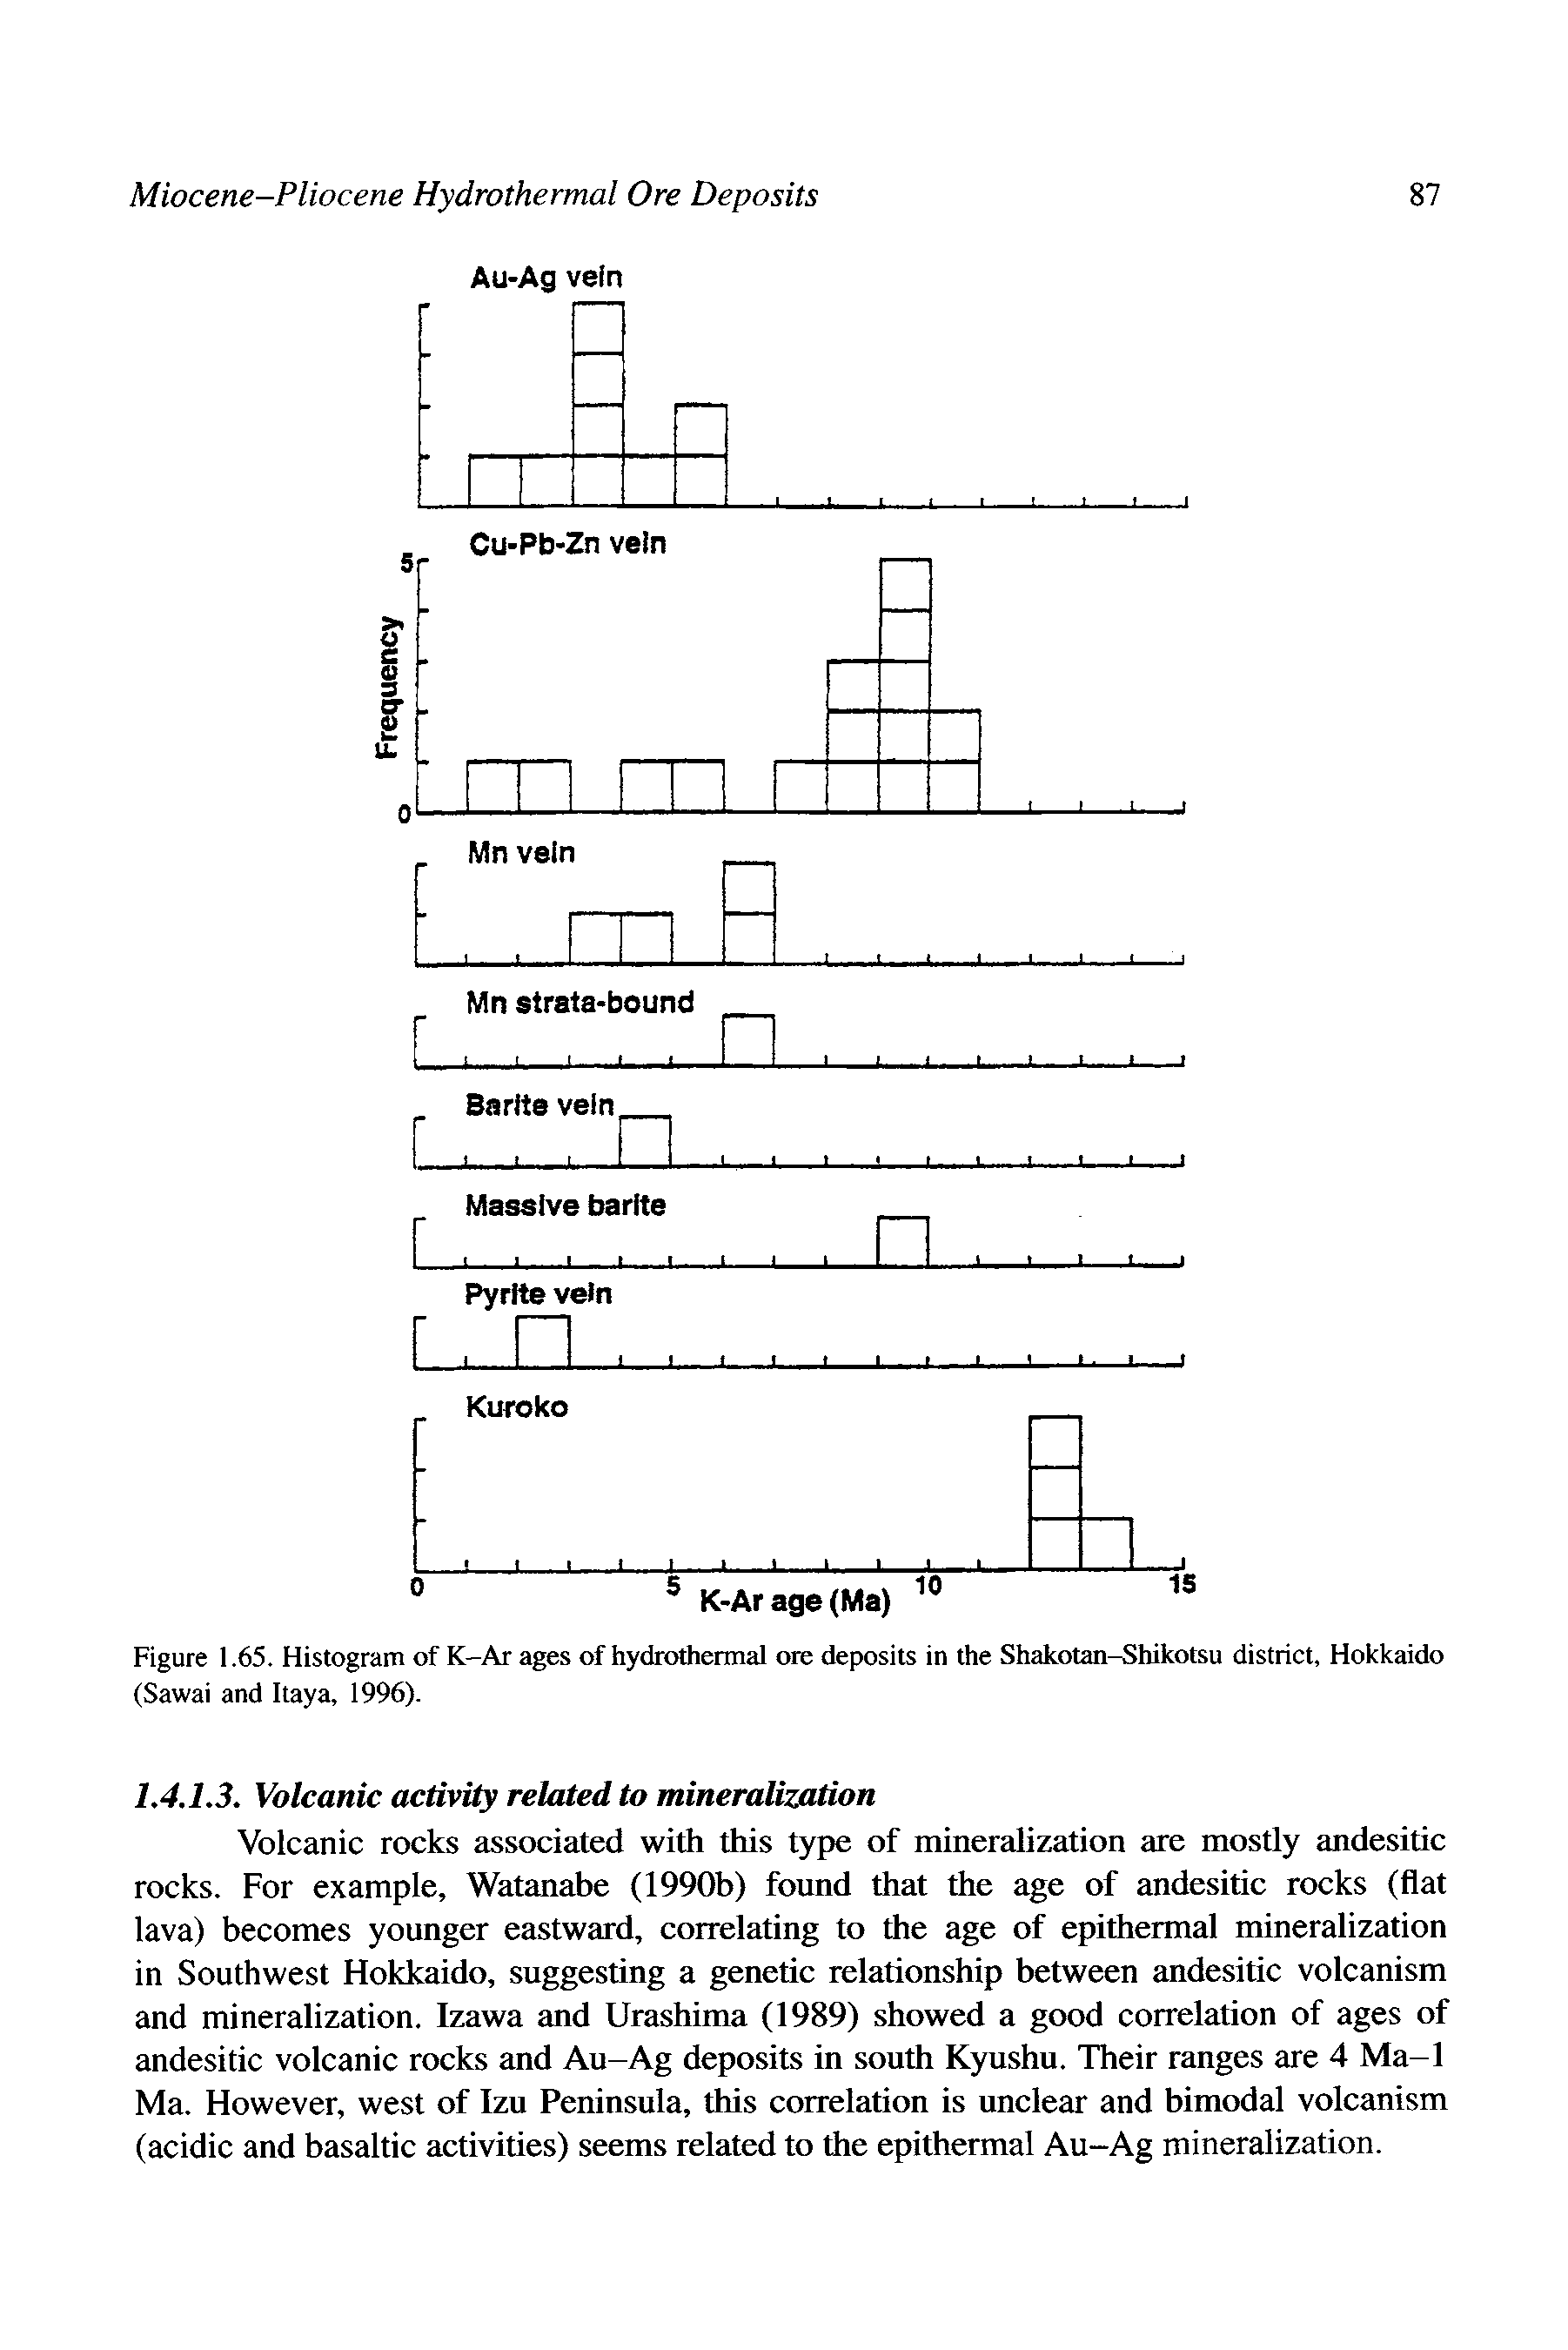 Figure 1.65. Histogram of K-Ar ages of hydrothermal ore deposits in the Shakotan-Shikotsu district, Hokkaido (Sawai and Itaya, 1996).